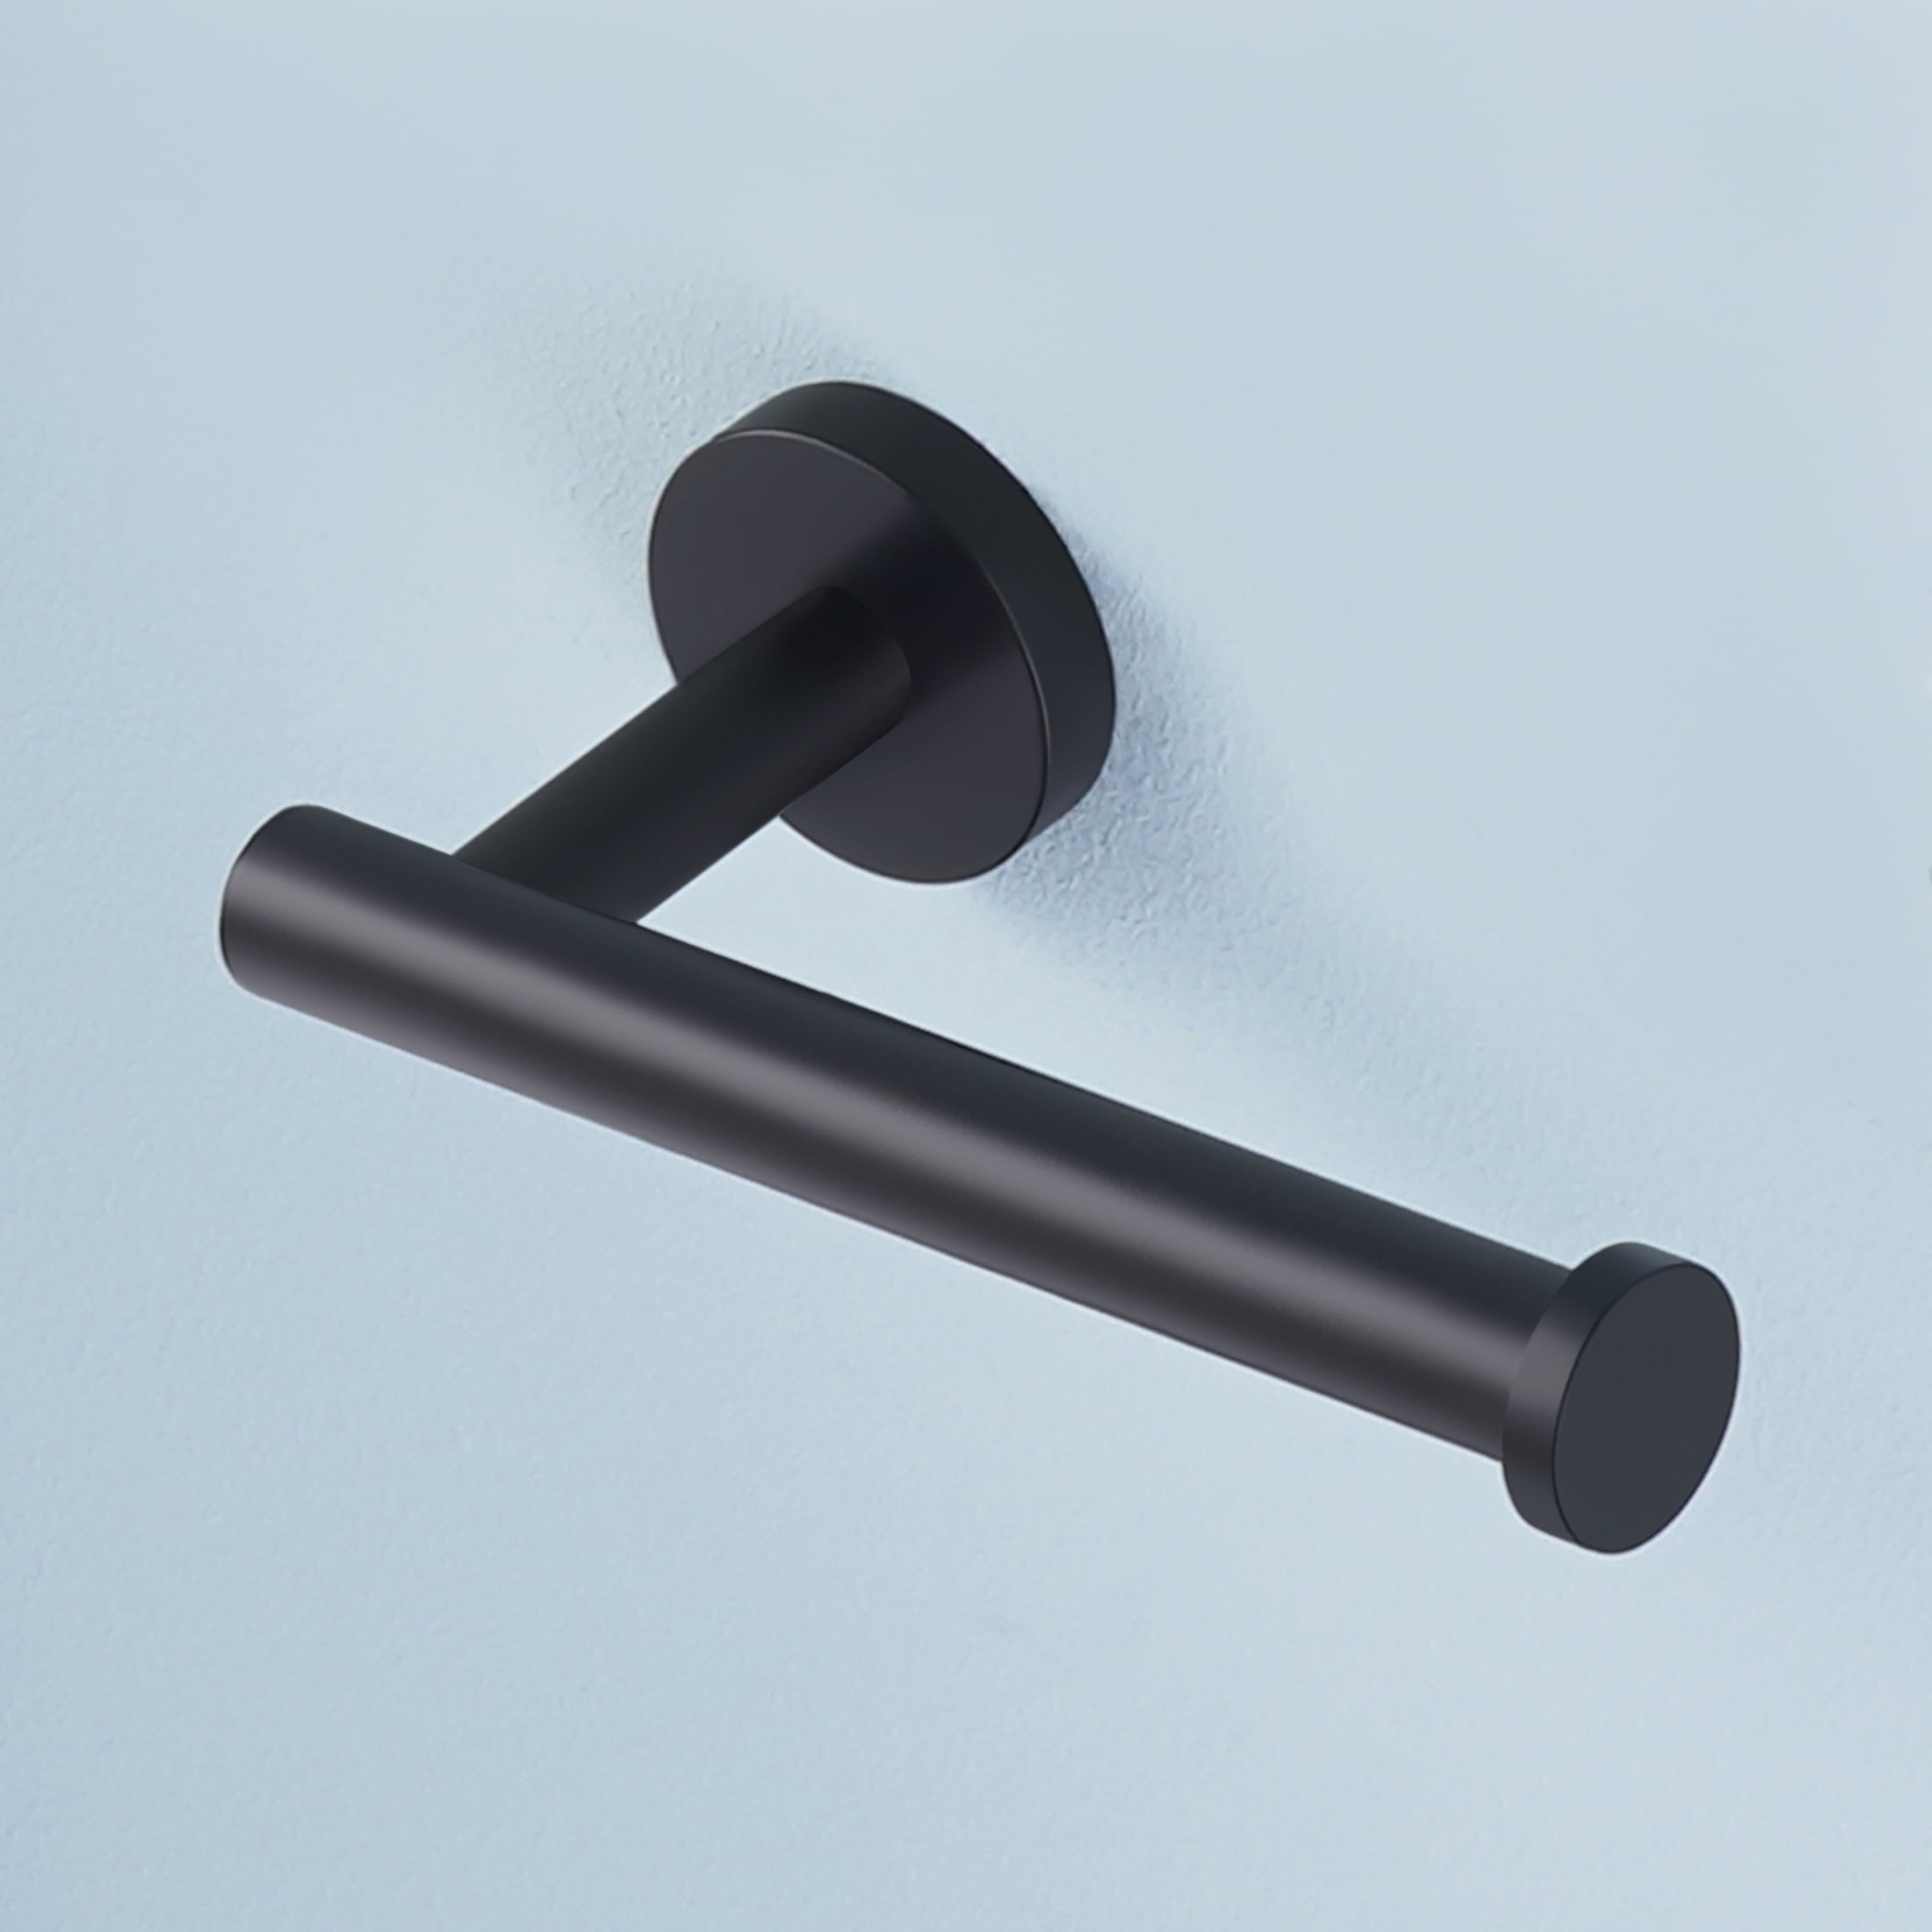 Floor Standing Toilet Paper Holder Black Toilet Roll Holder for Bathroom  304 Stainless Steel Pole 12MM Thick Tempered Glass Base